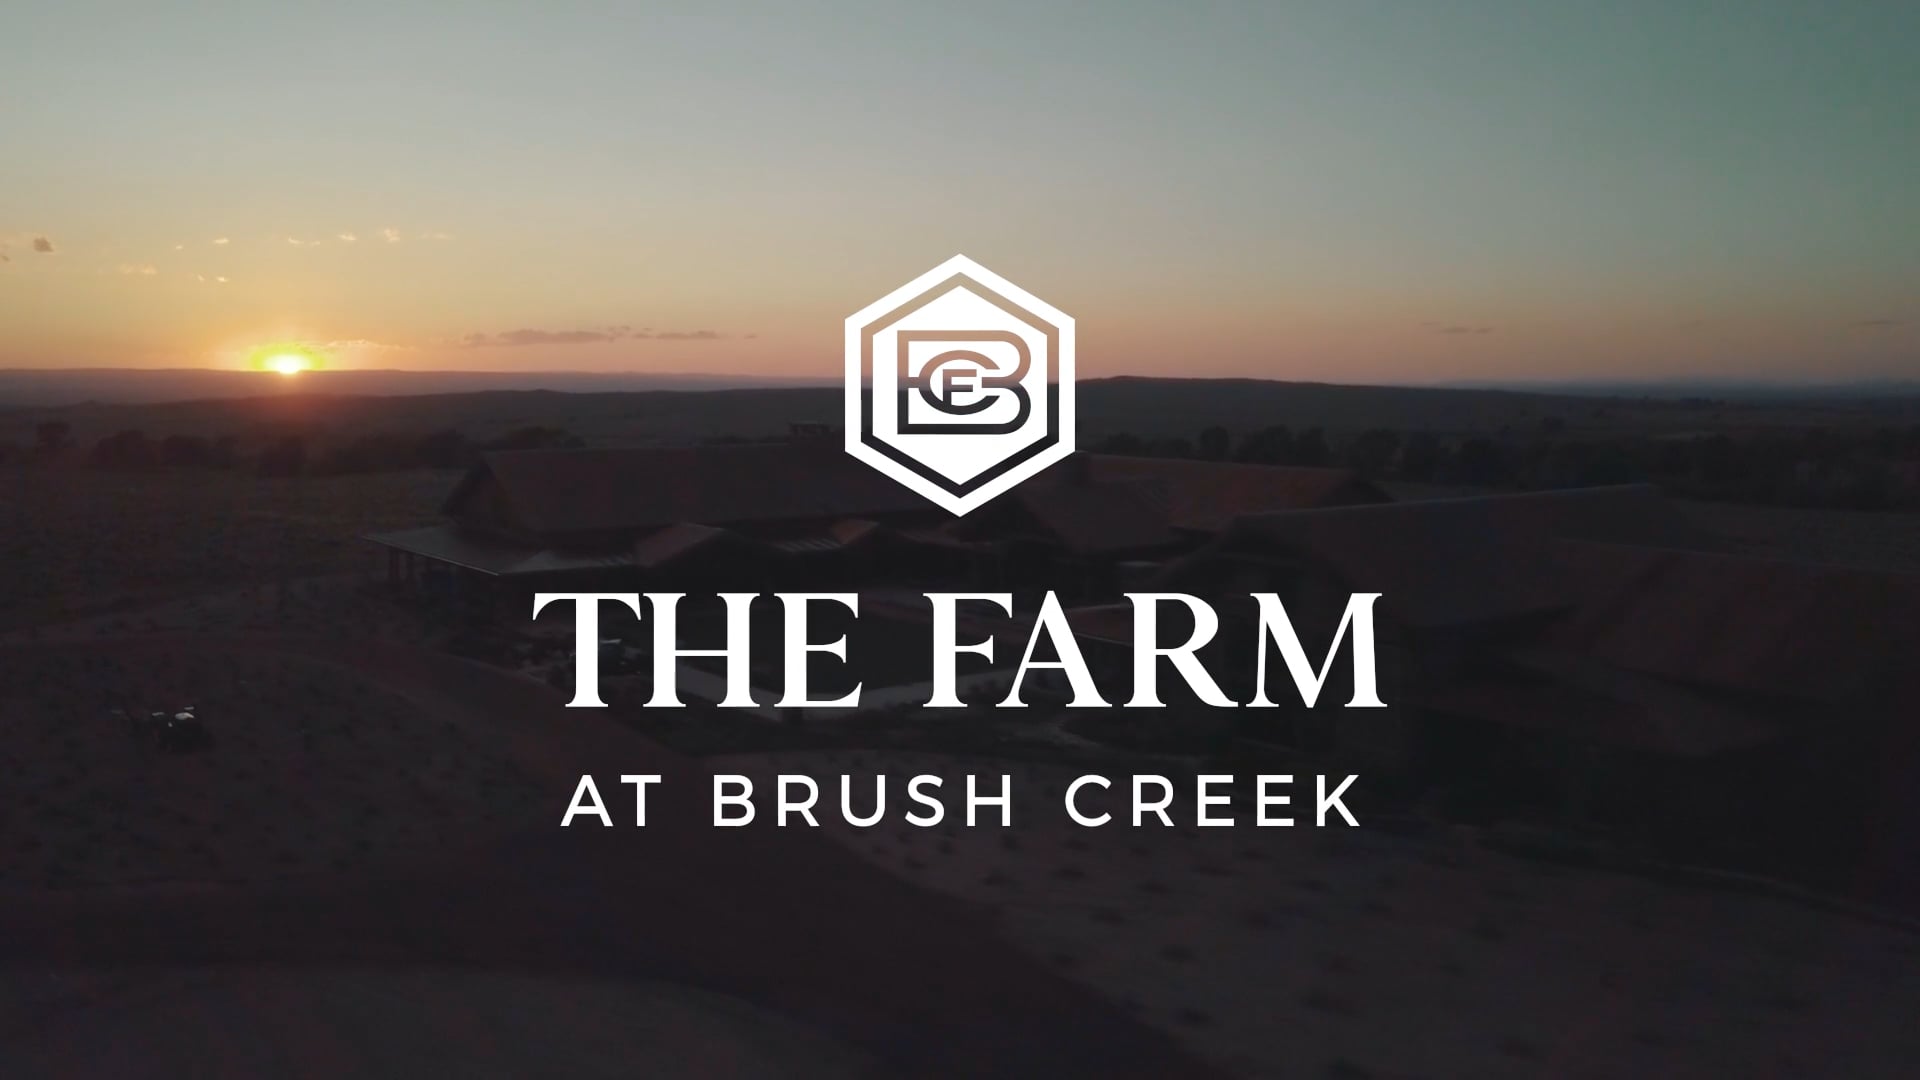 The Farm Experience at Brush Creek Ranch